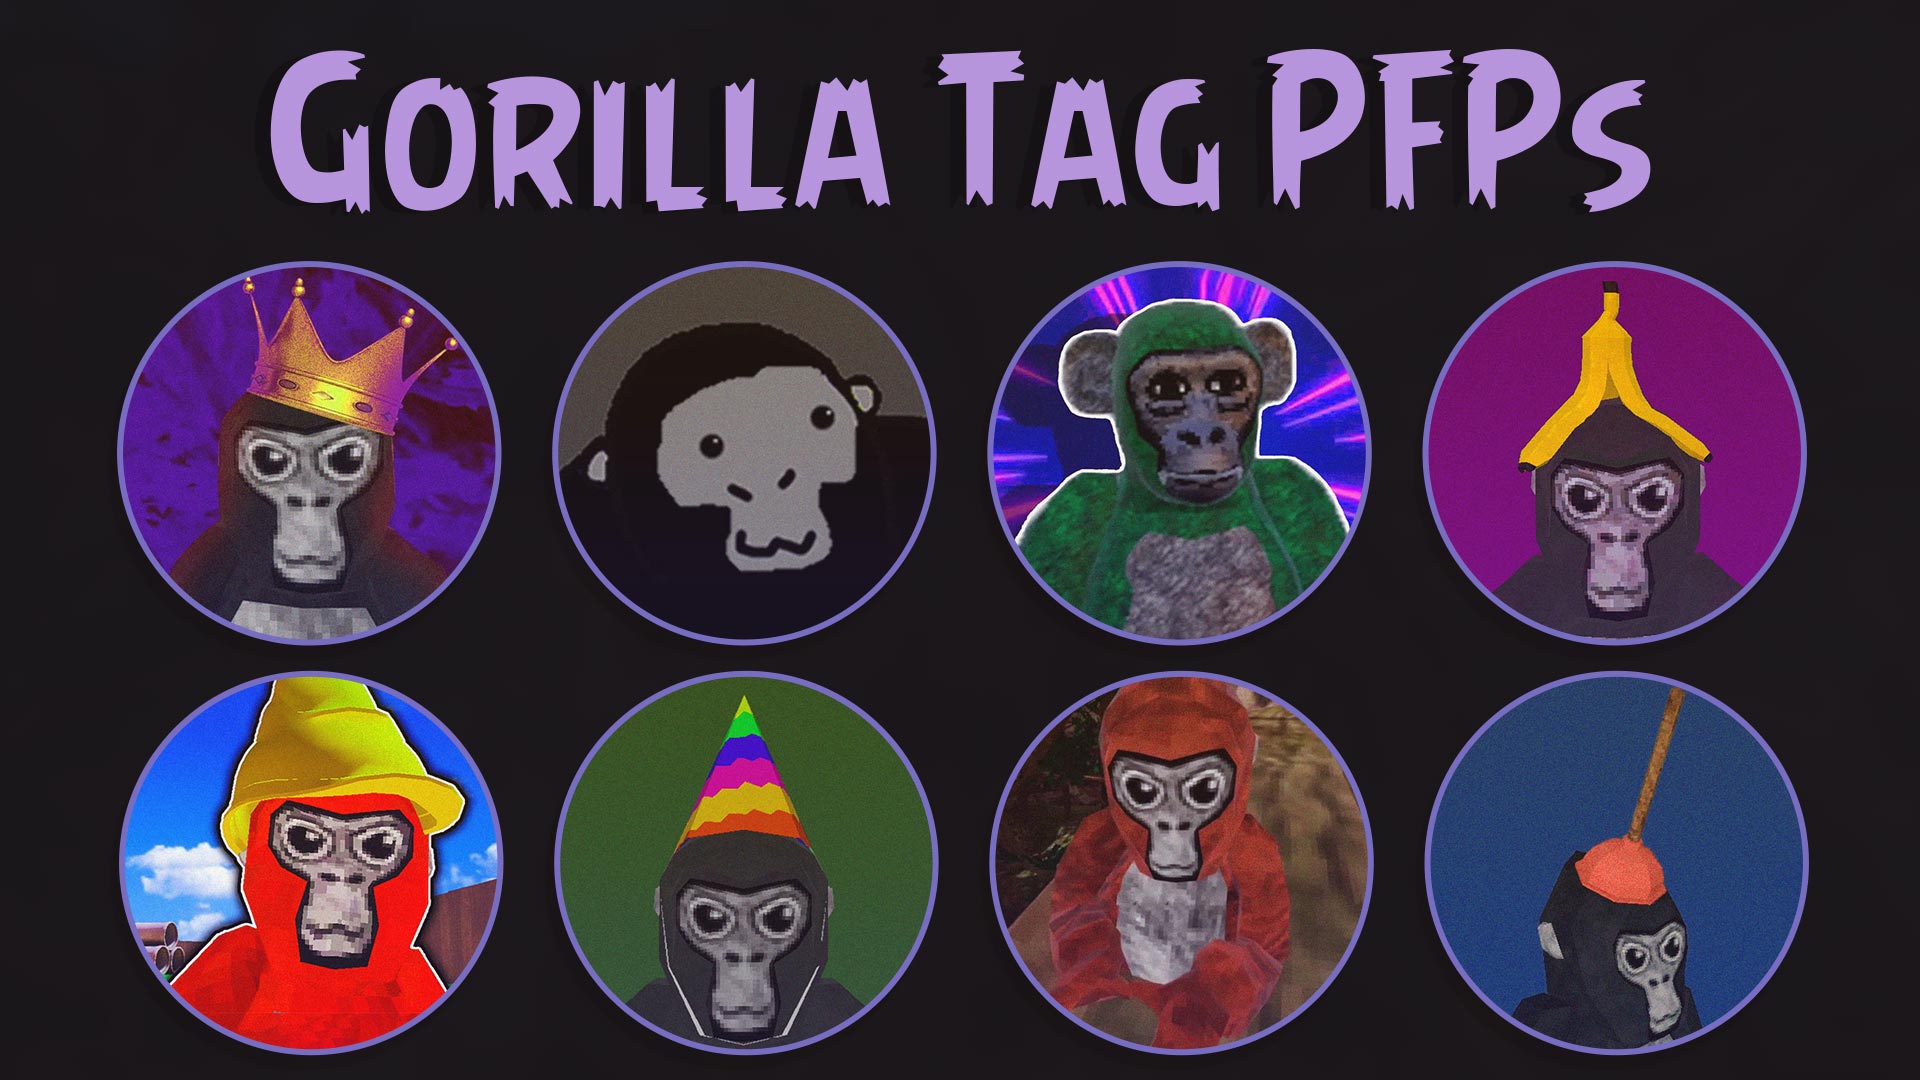 Free soundboard for gorilla tag